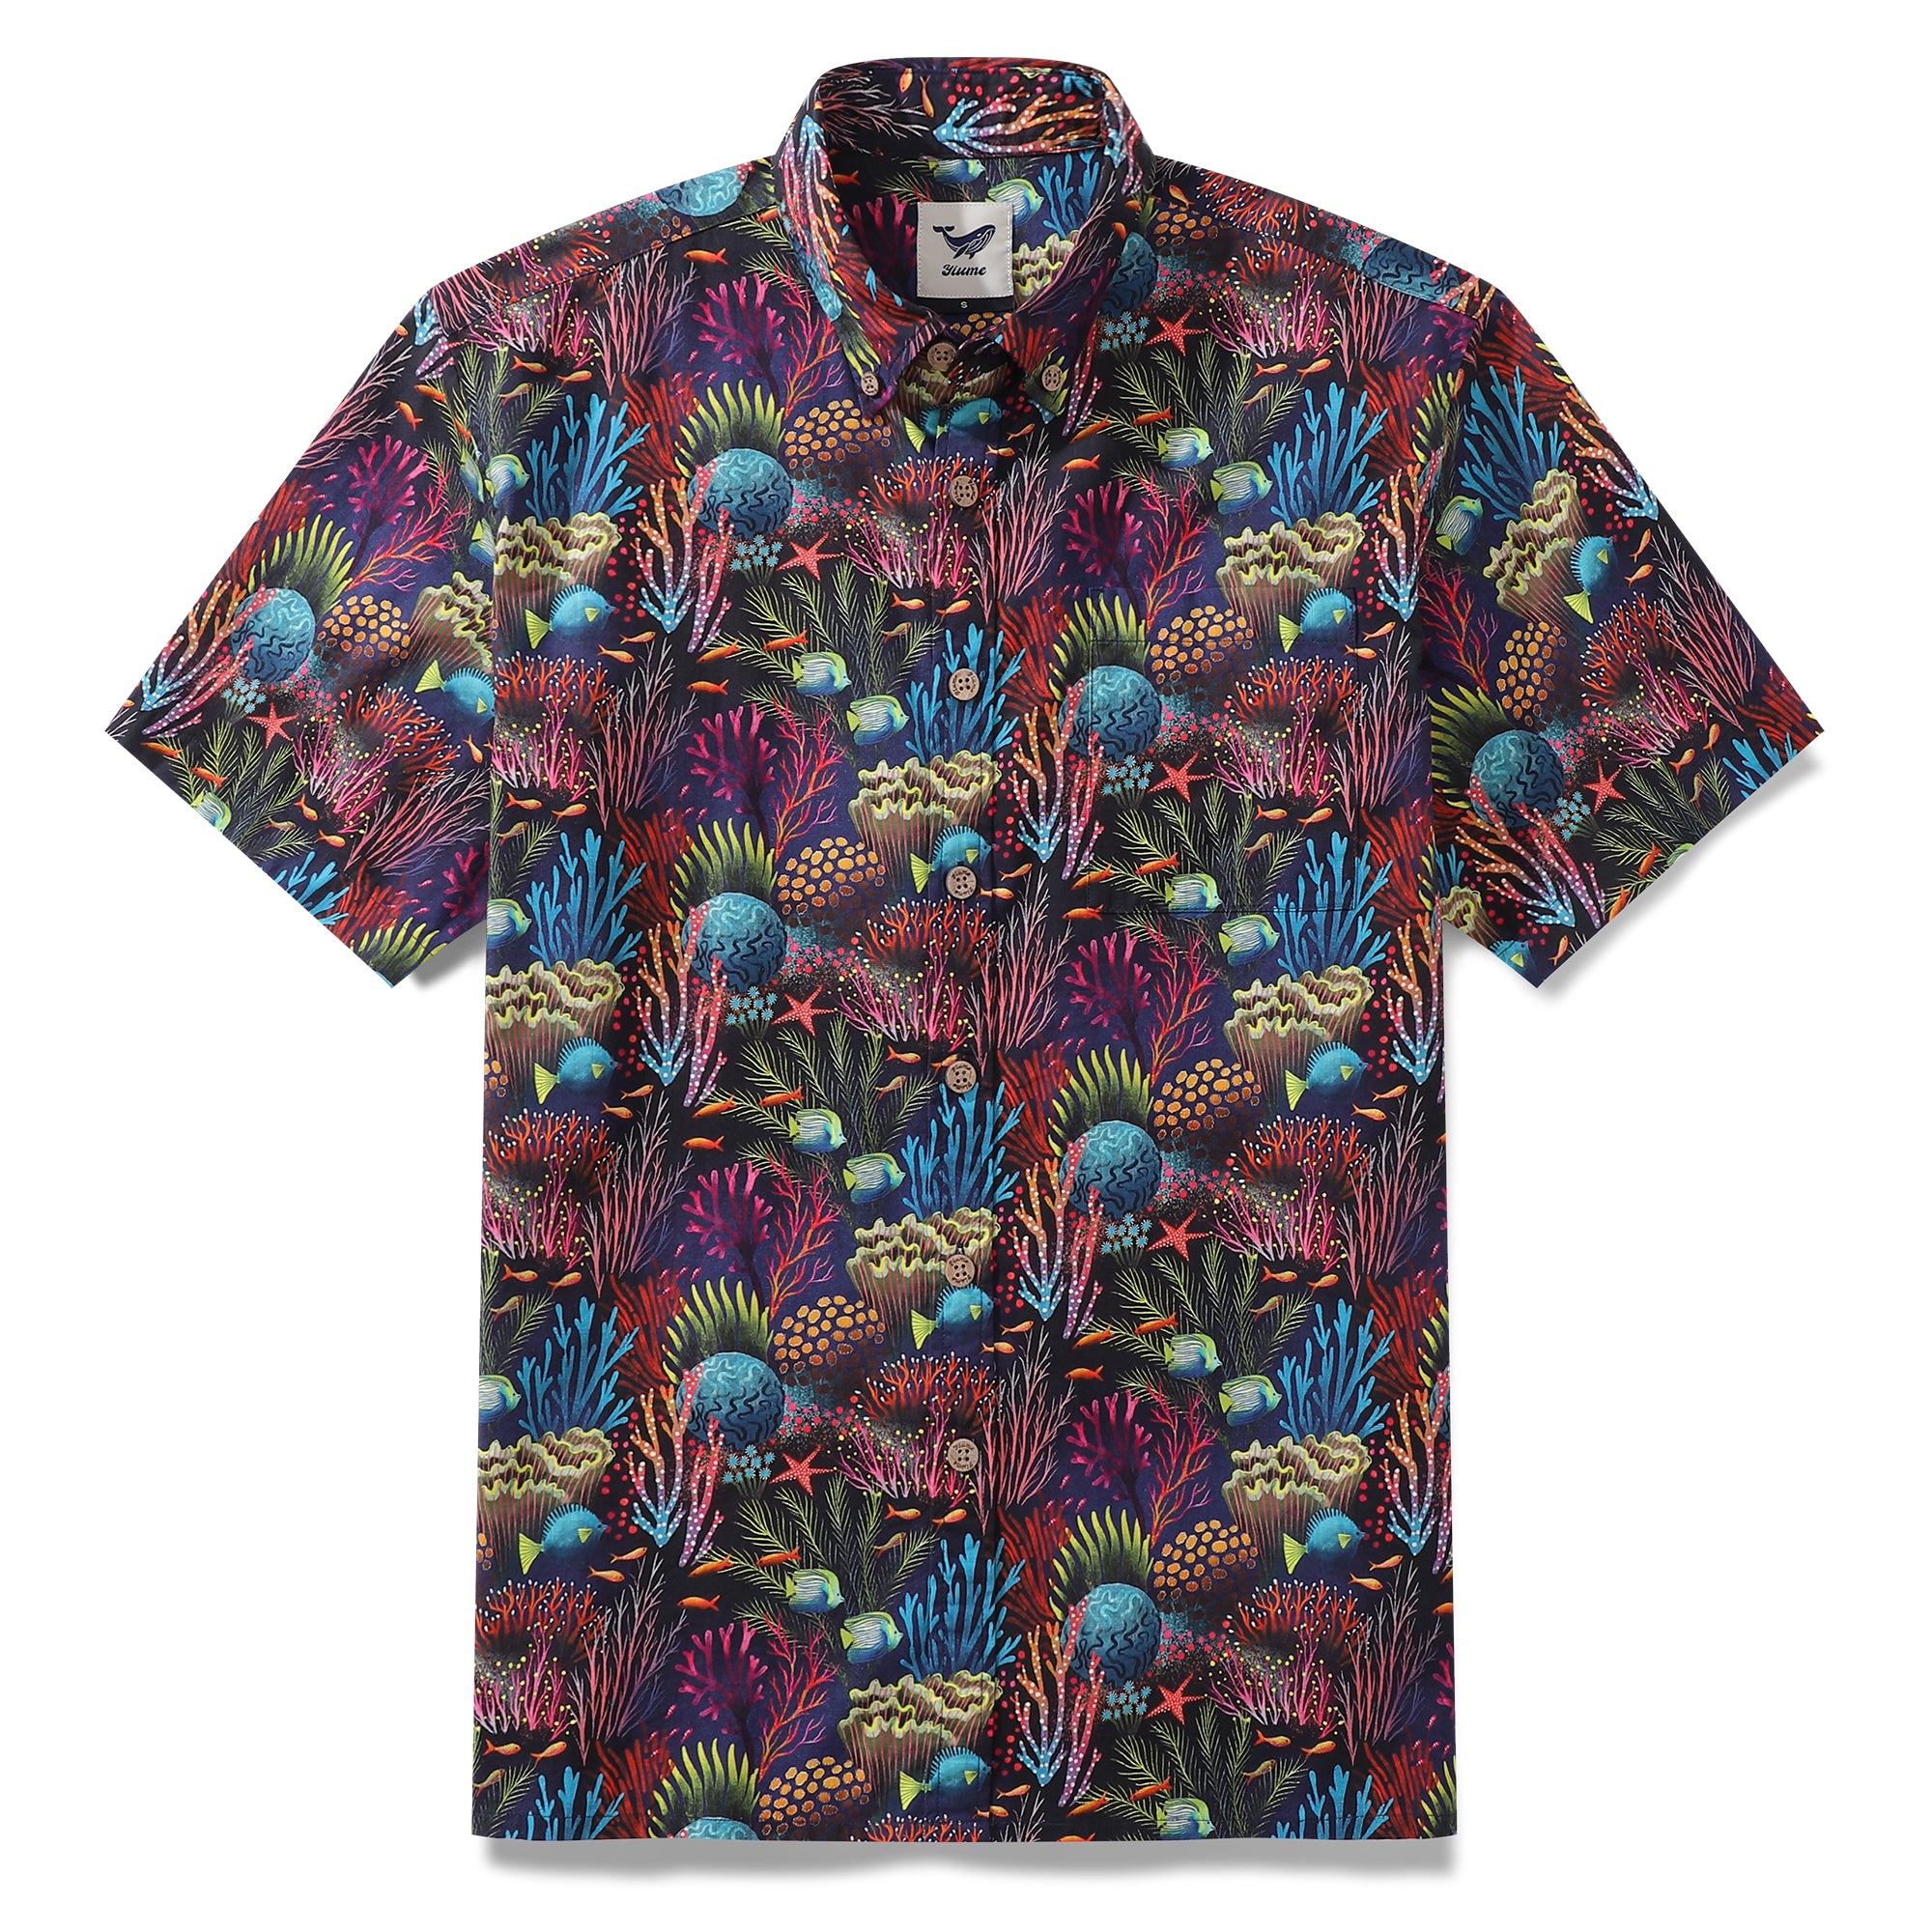 Mens Hawaiian Shirt Magical World Coral Reef Short Sleeve Cotton Beach Shirts for Men 3XL